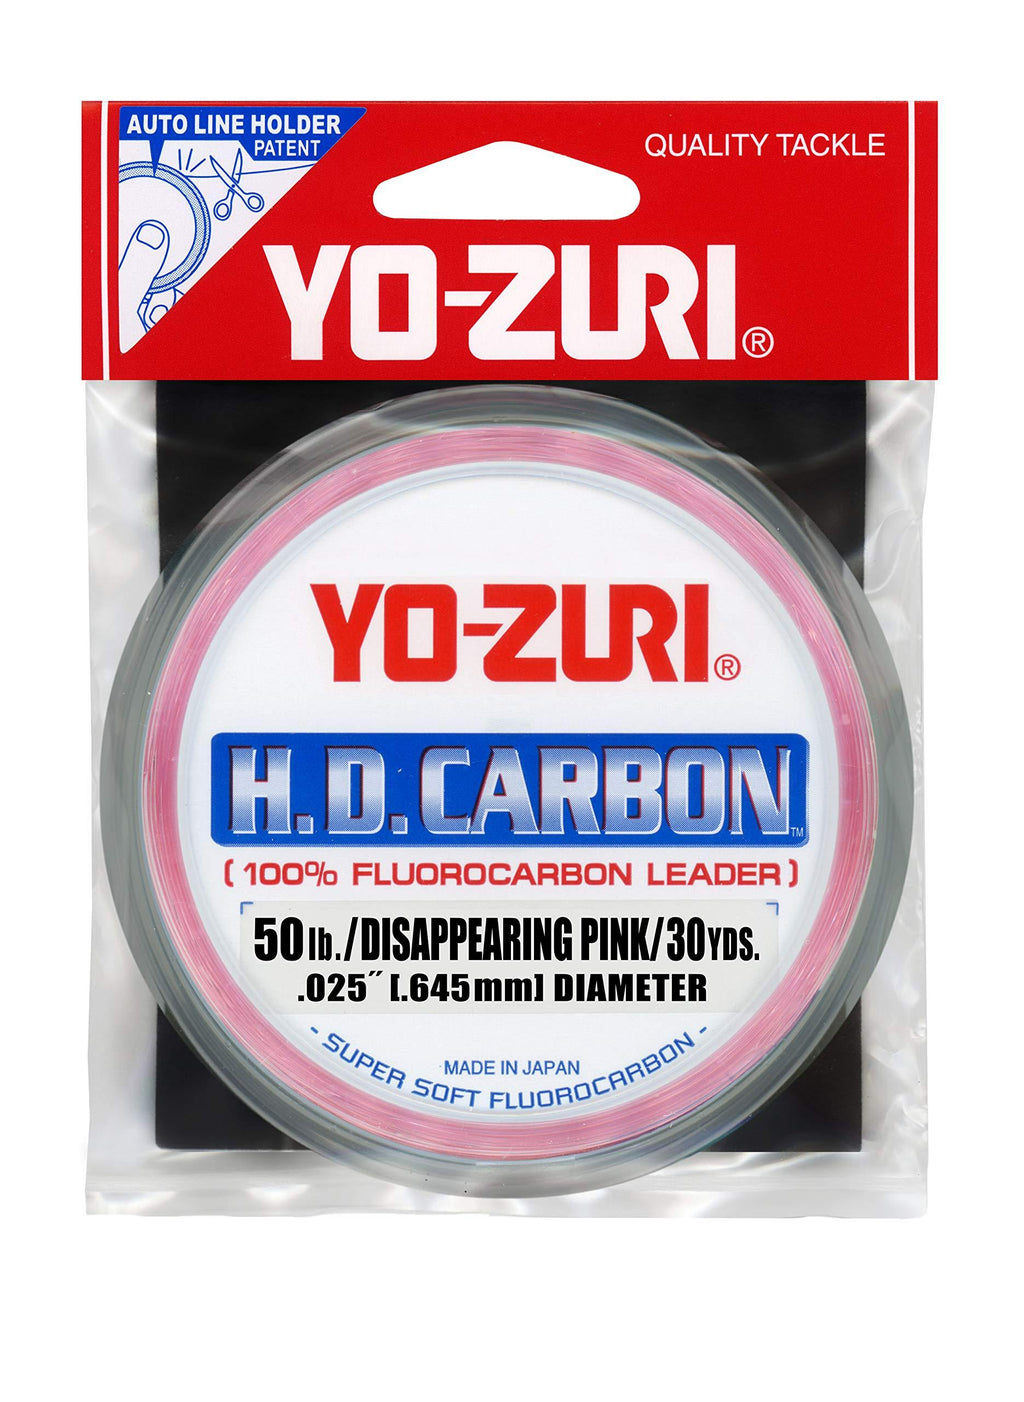 [AUSTRALIA] - Yo-Zuri HD Carbon Disappearing Pink 30 Yards Fluorocarbon Leader 50 Pound 